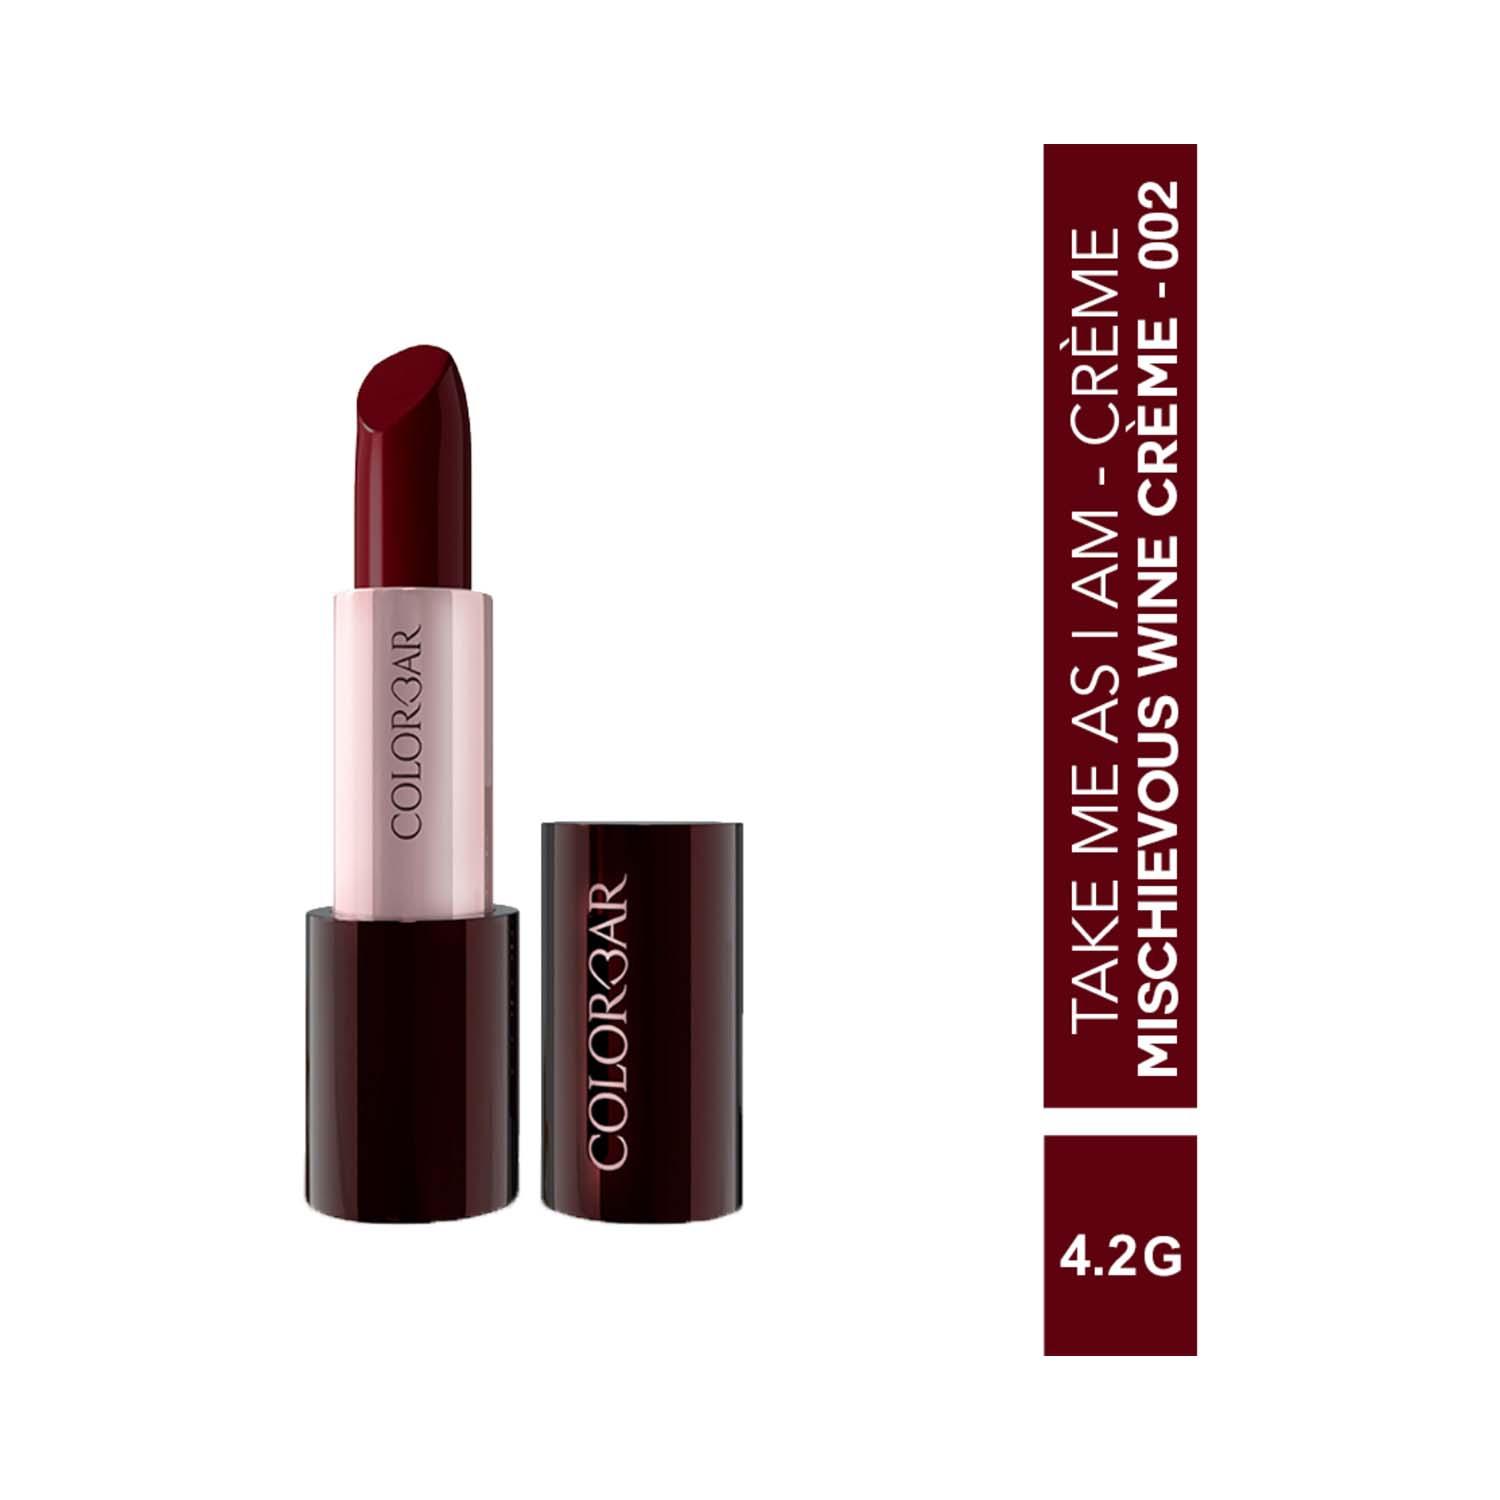 Colorbar | Colorbar Take Me As I Am Vegan Creme Lipstick - Mischievous Wine Creme - [002] (4.2 g)